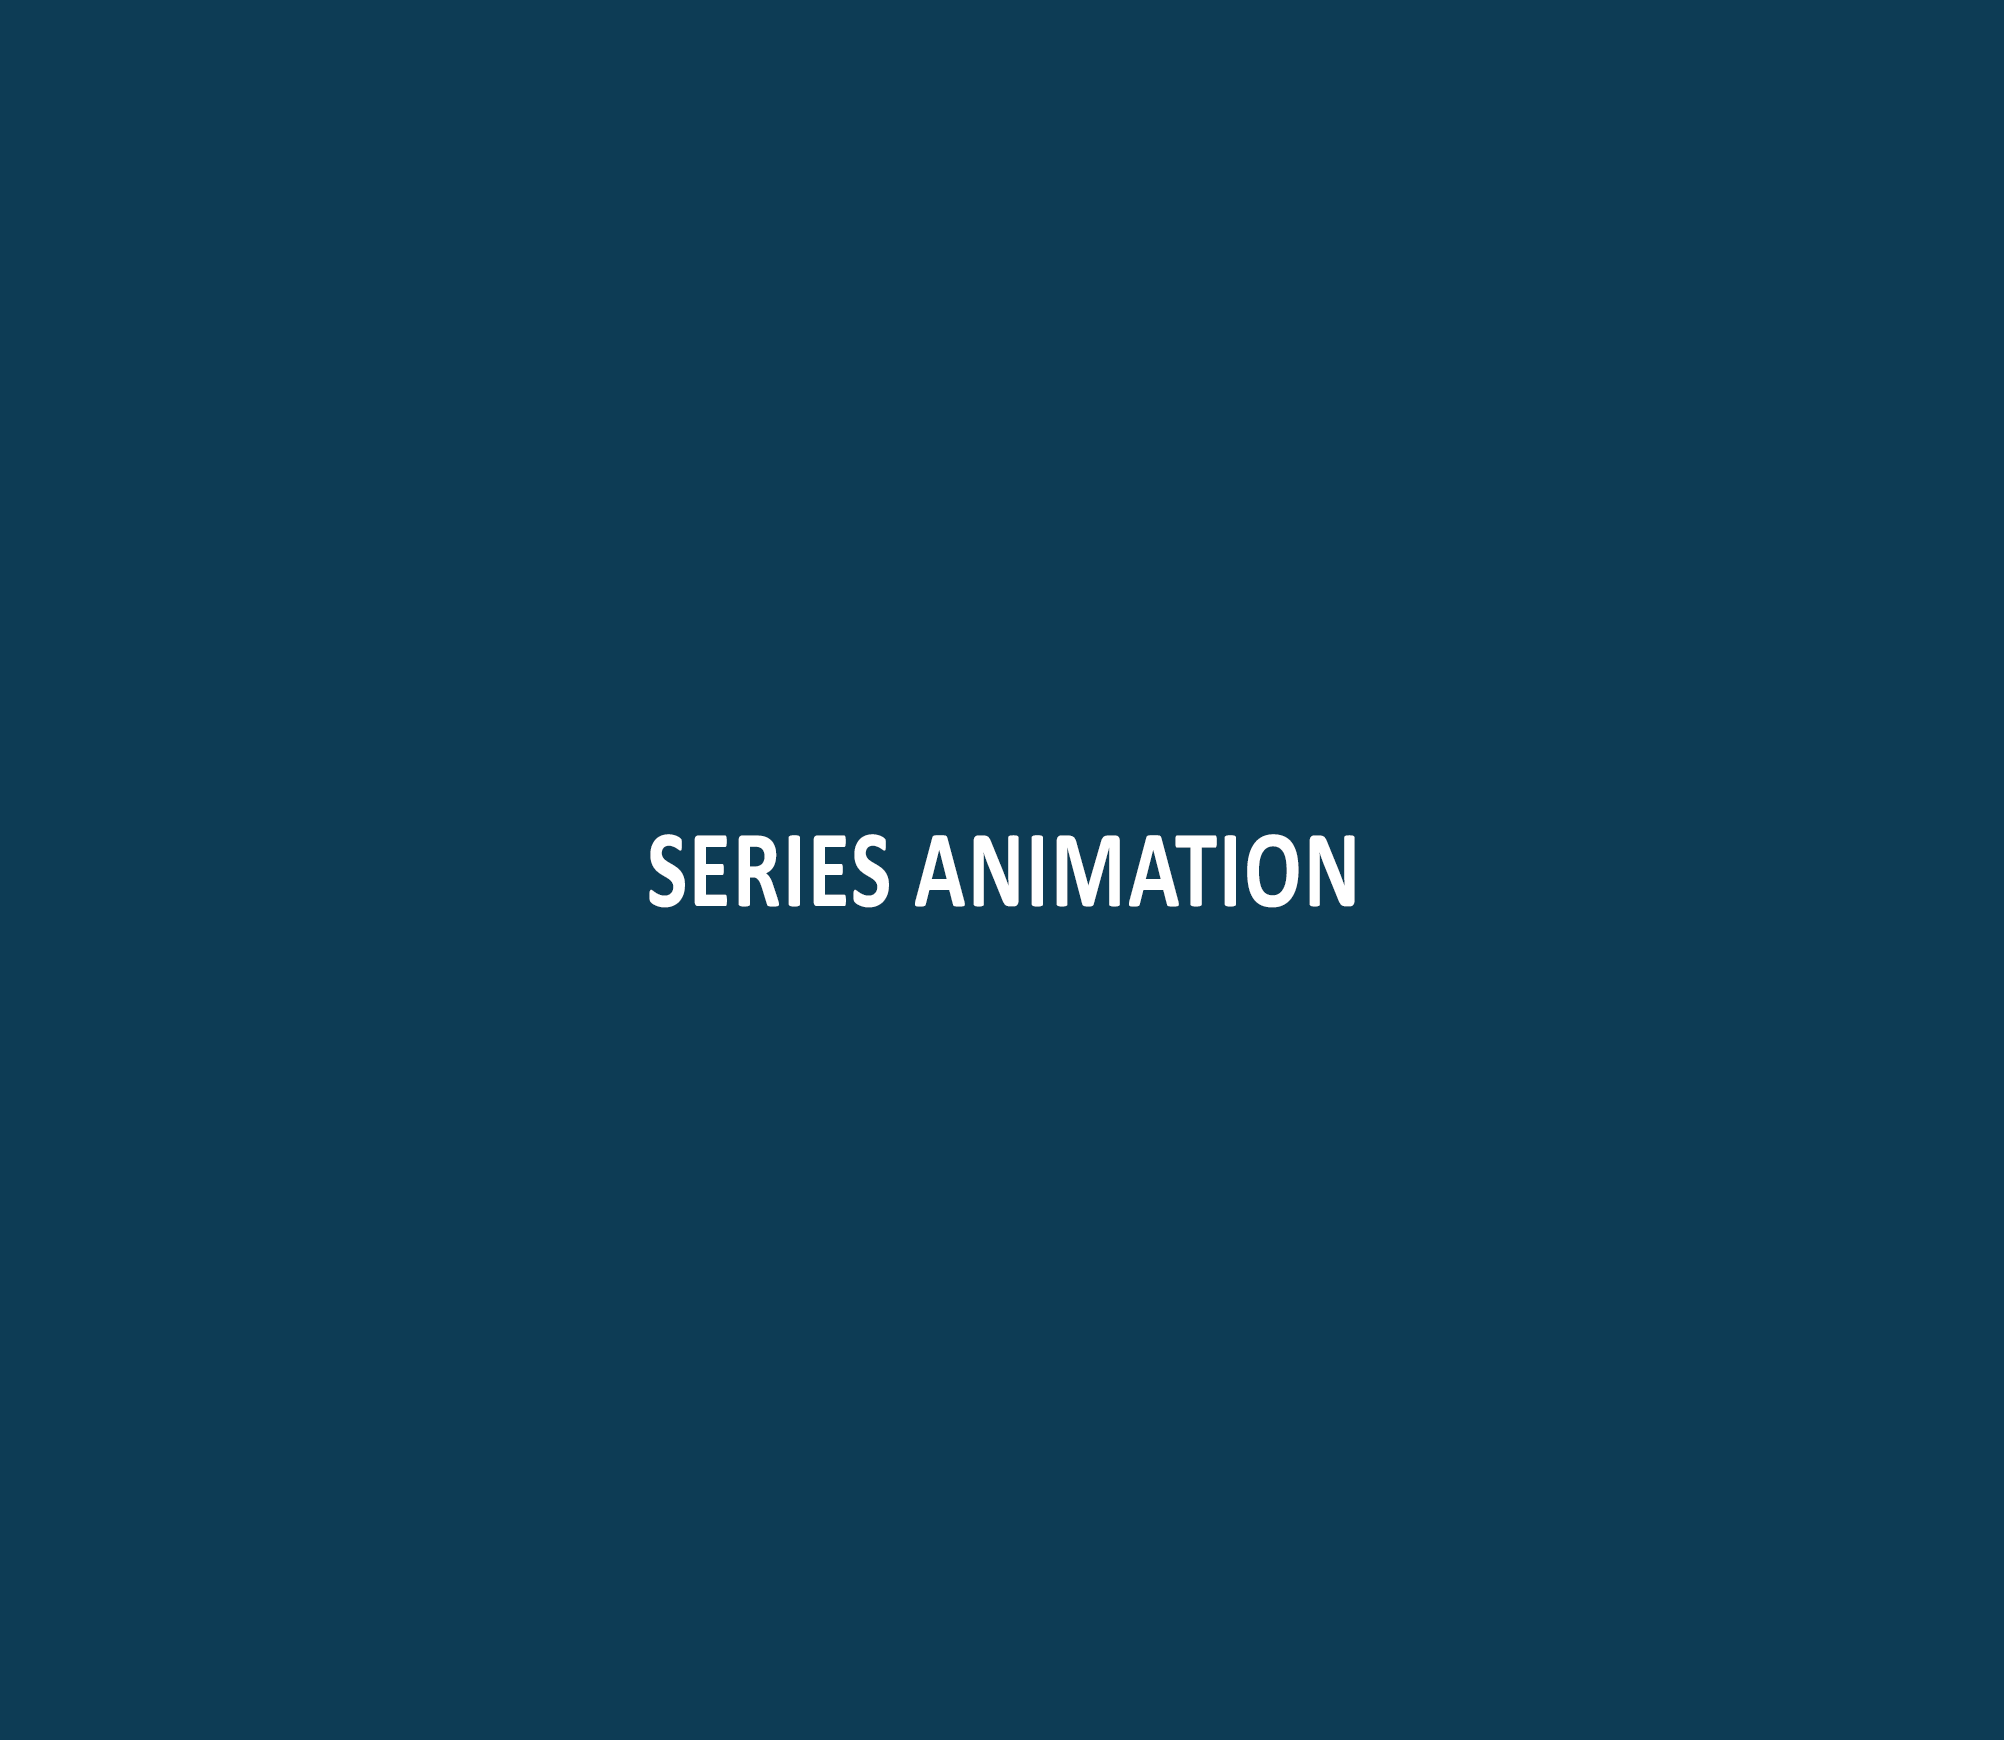 Series Animation